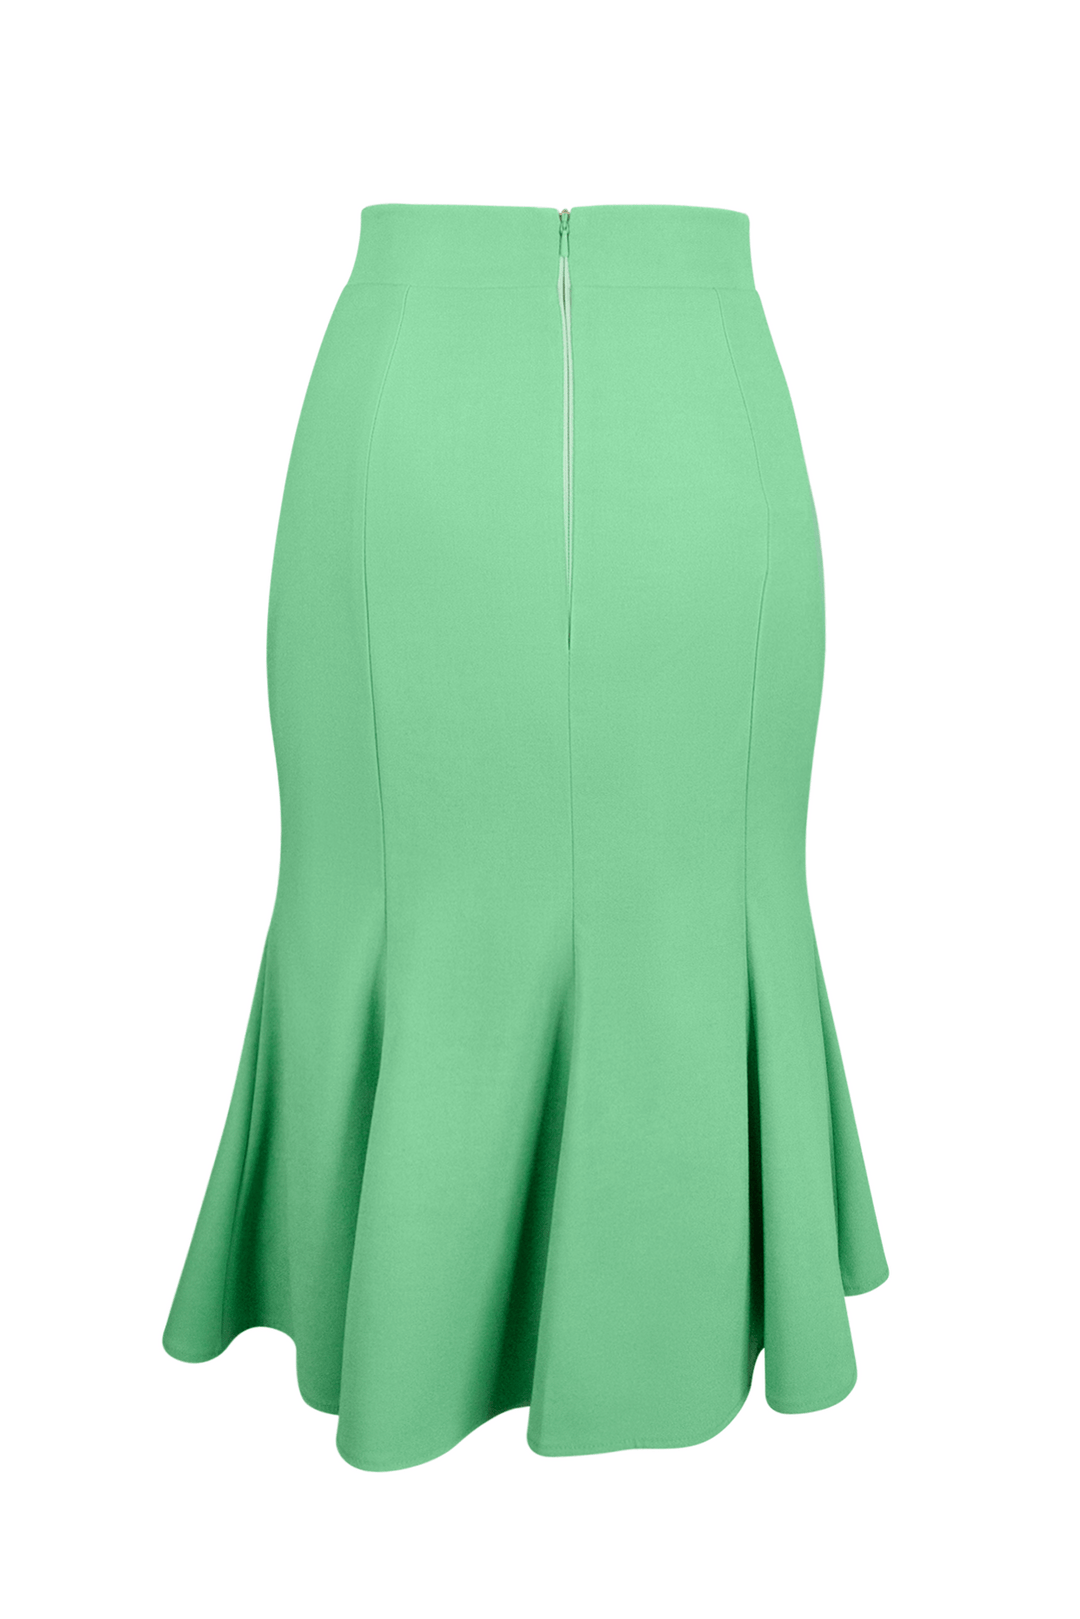 Cotton Tail Soiree Classic Skirt (Green) - Kitten D'Amour